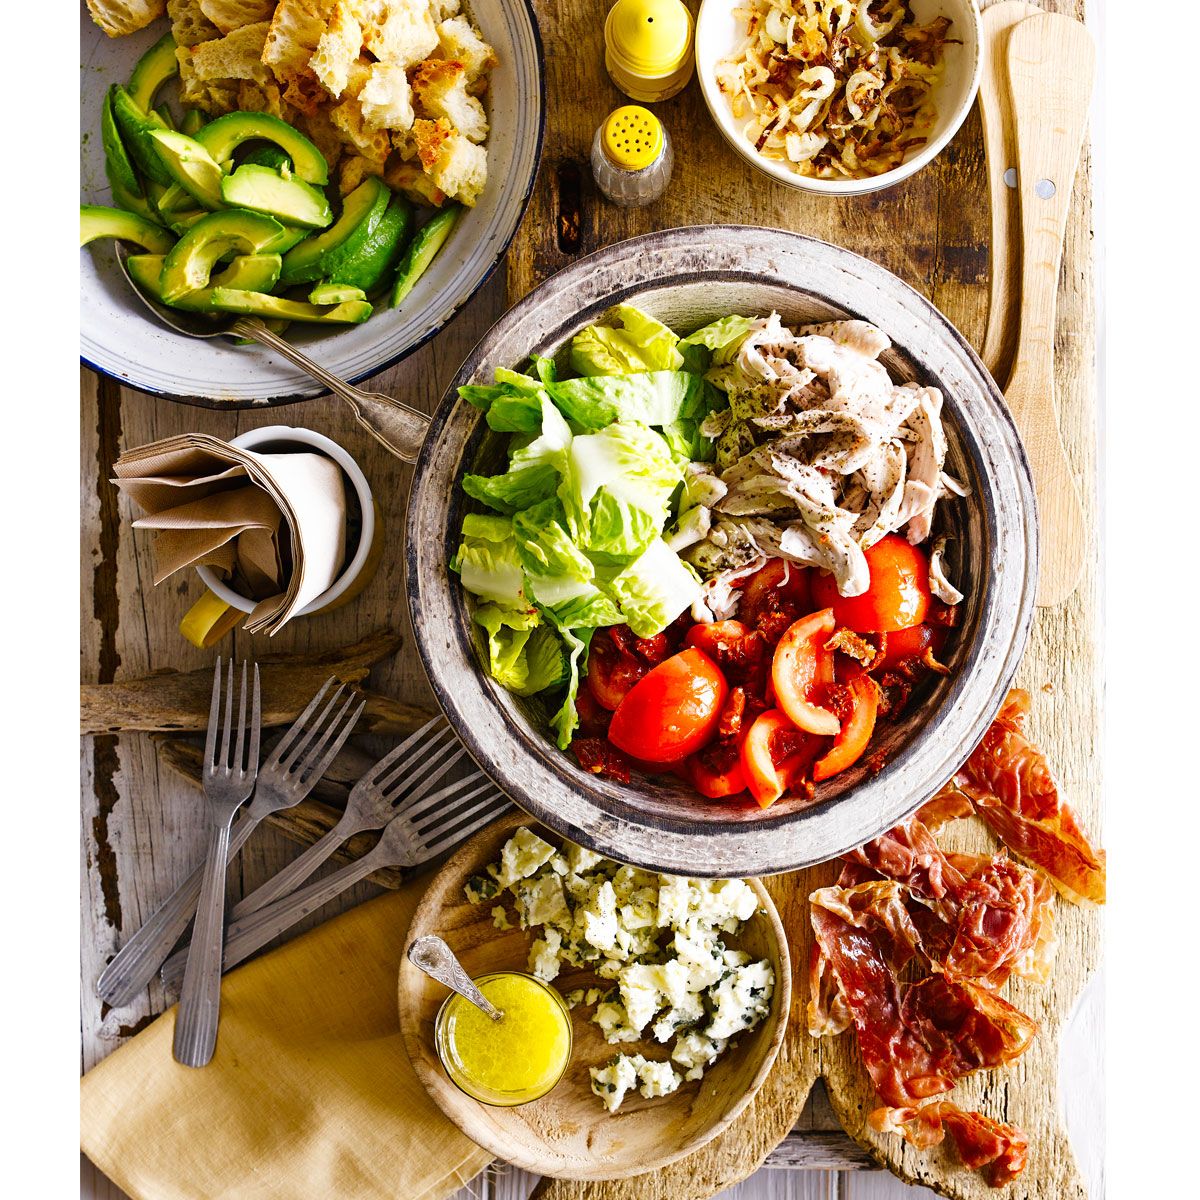 Turkey cobb salad